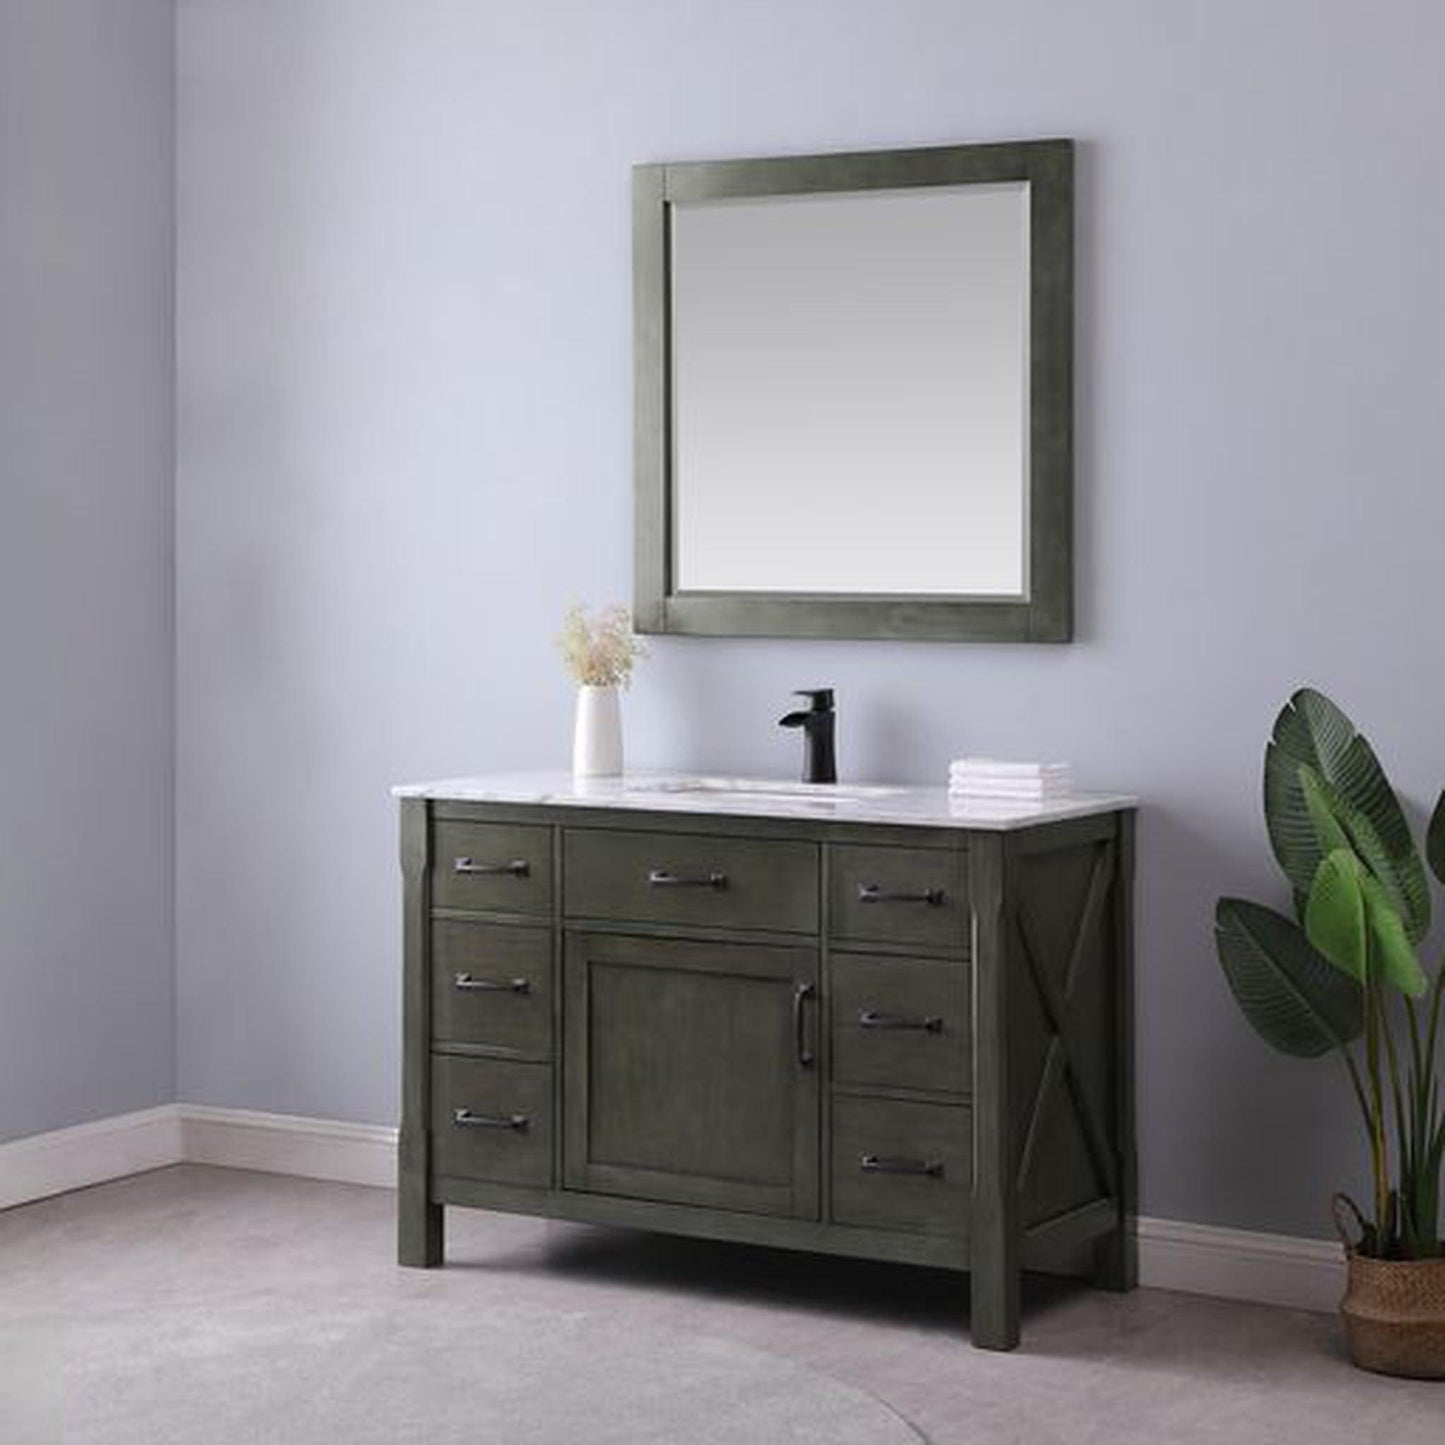 Altair Maribella 48" Single Rust Black Freestanding Bathroom Vanity Set With Mirror, Natural Carrara White Marble Top, Rectangular Undermount Ceramic Sink, and Overflow